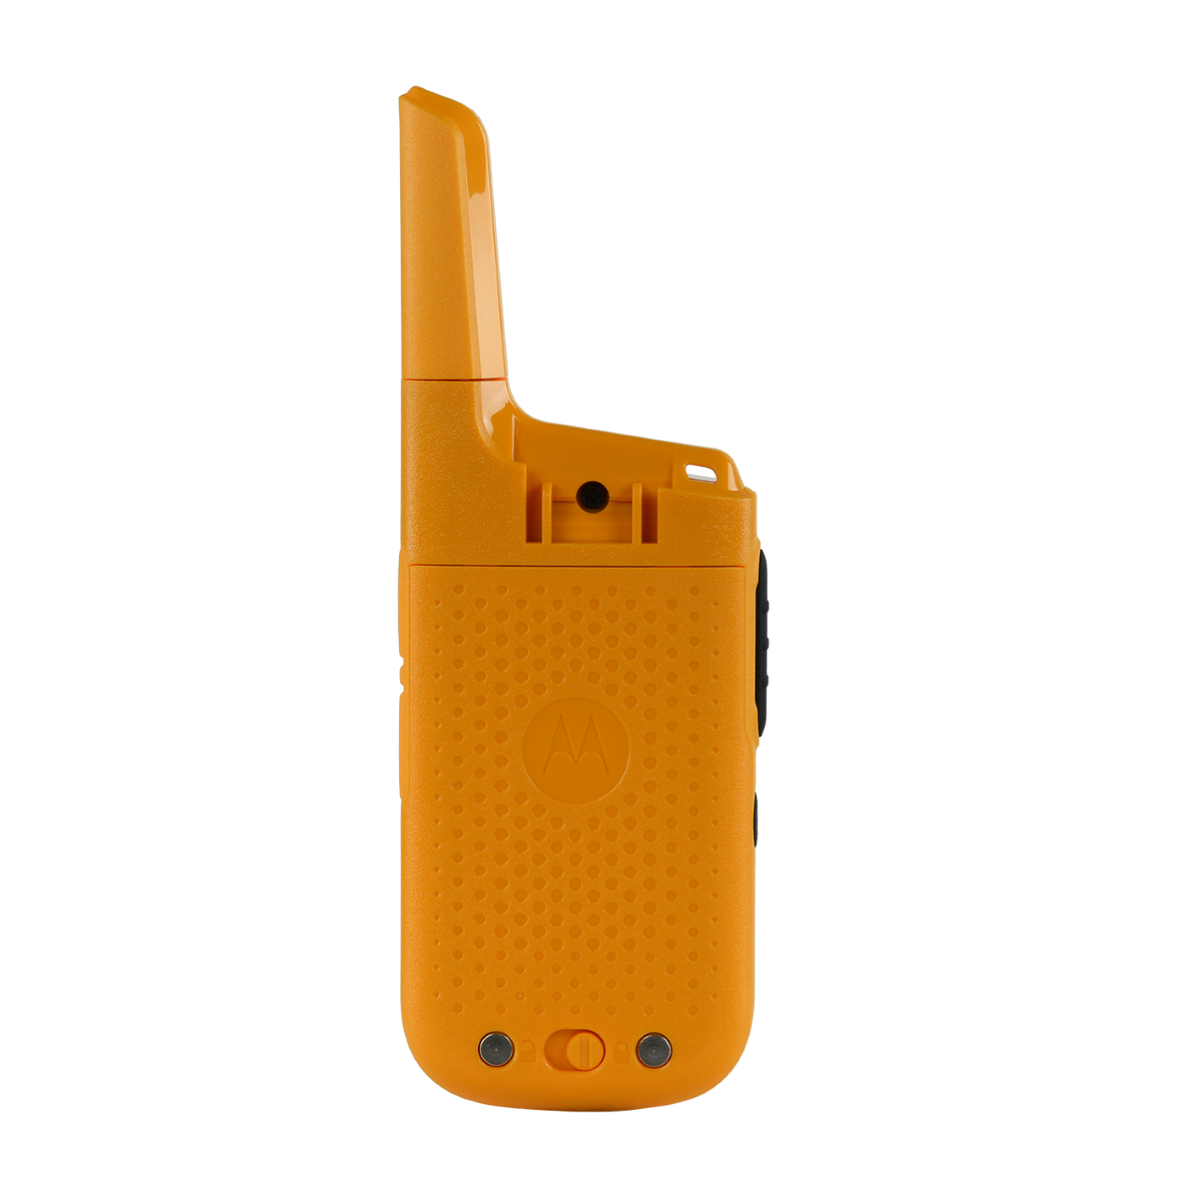 Motorola Talkabout T72 Twin Pack portofoonset geel